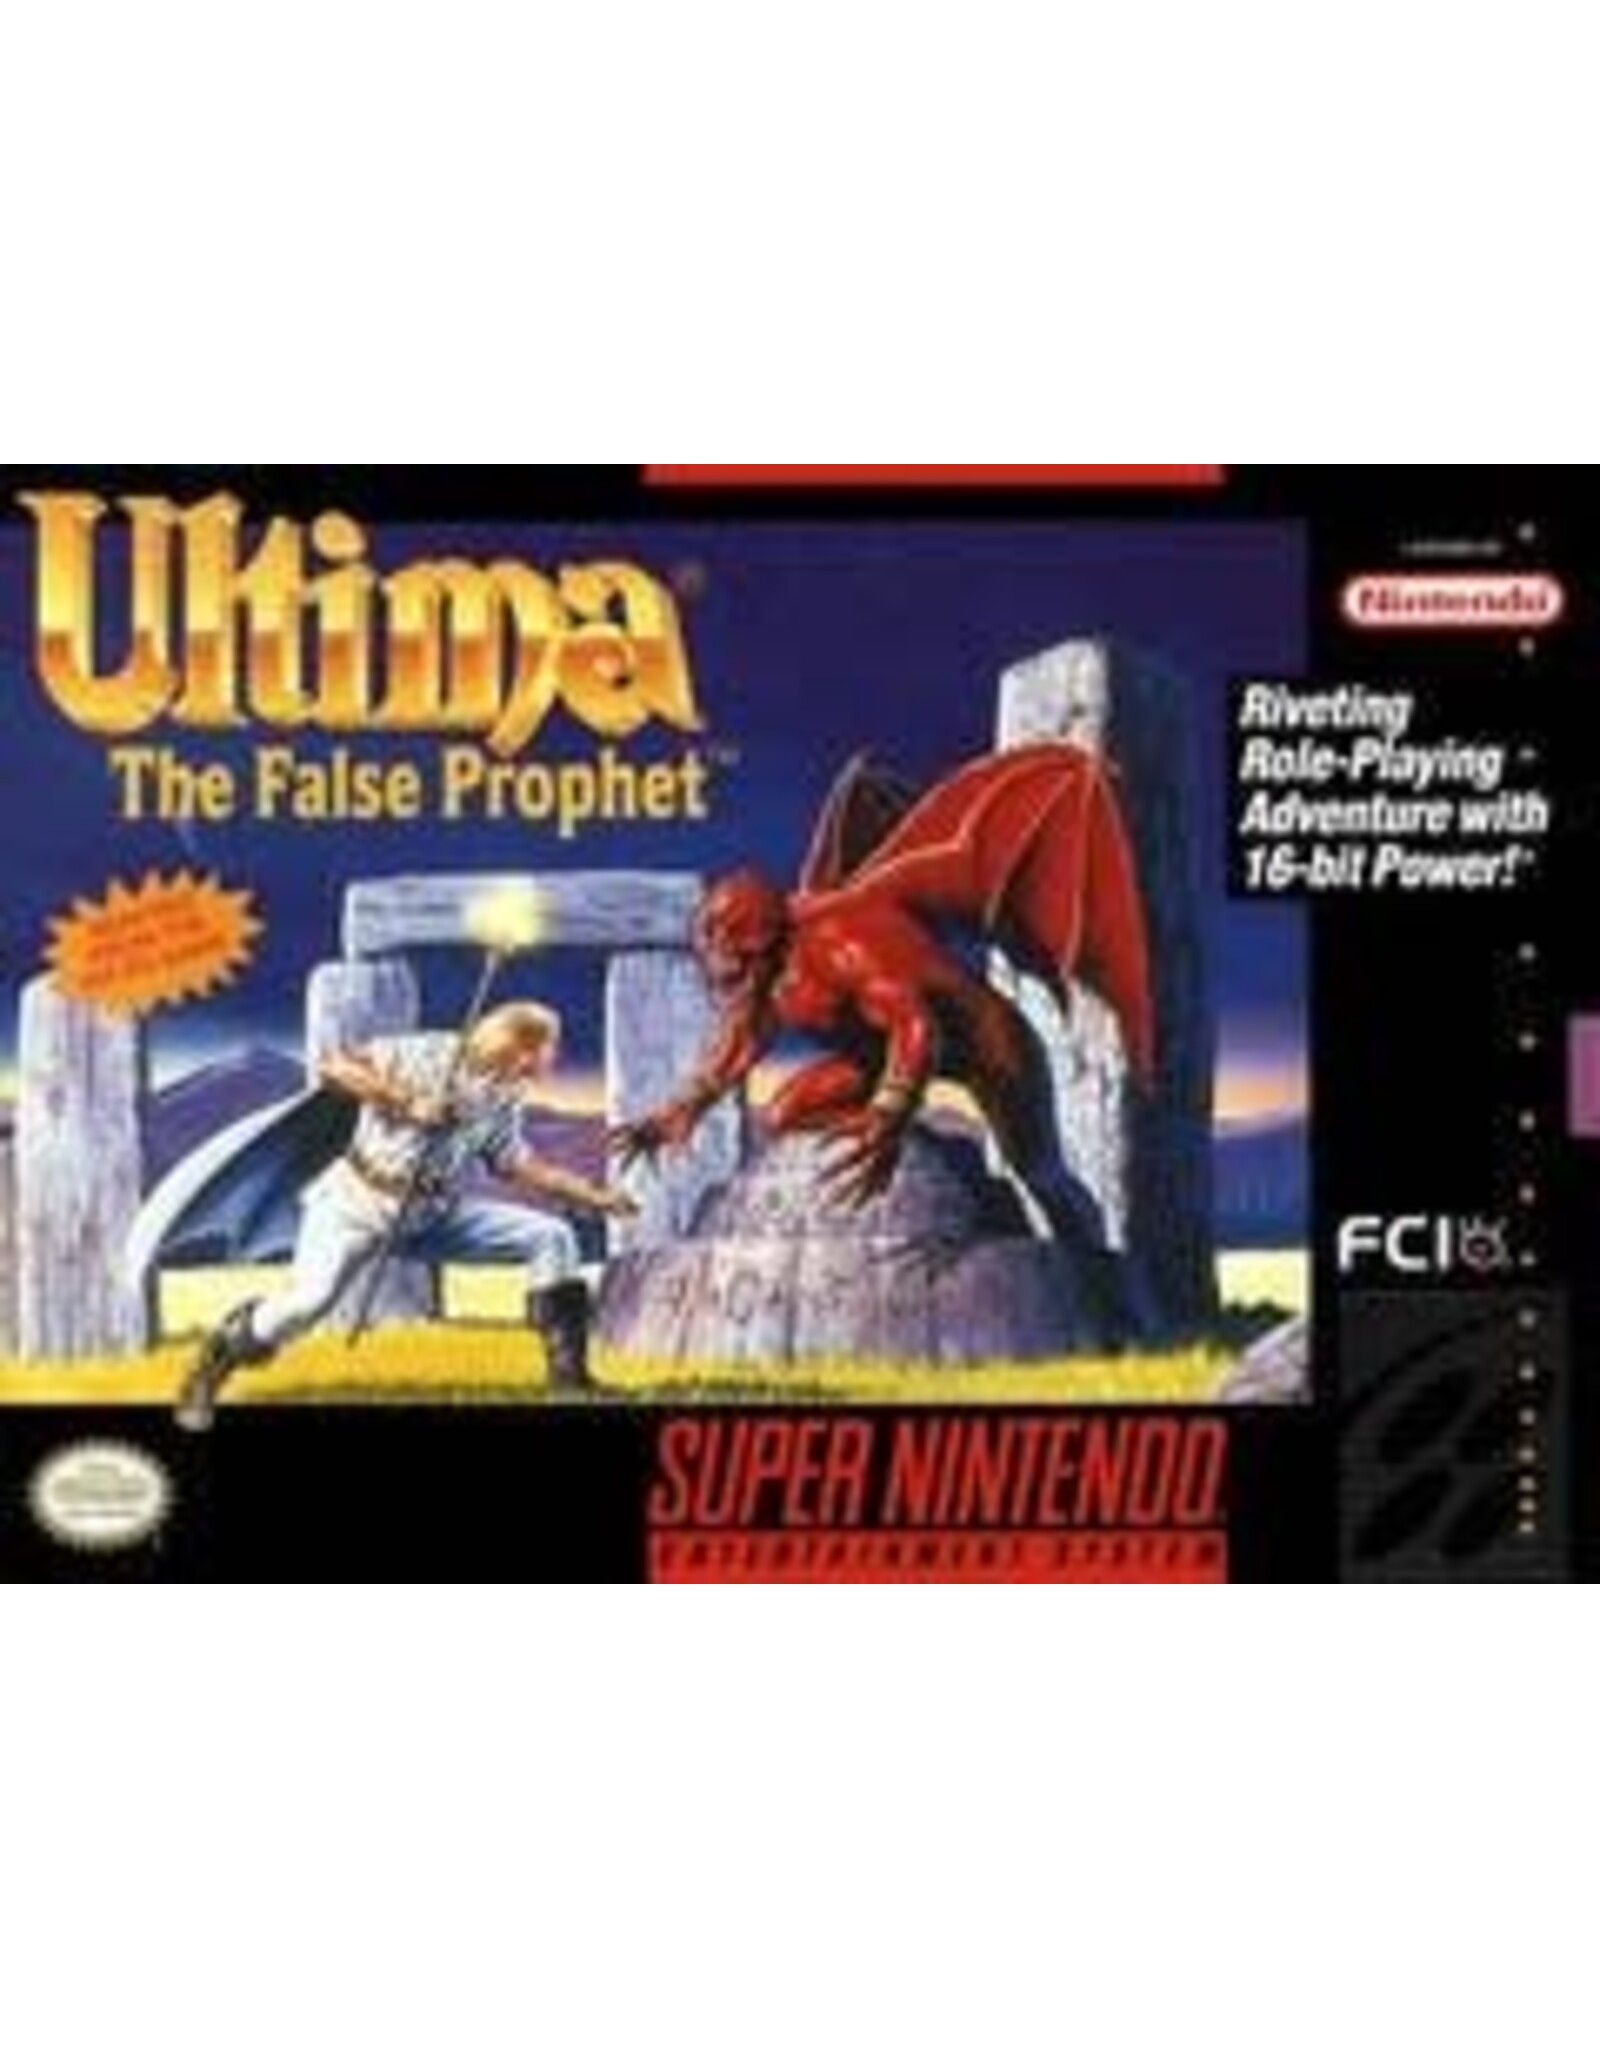 Super Nintendo Ultima The False Prophet (Used, Cart Only)